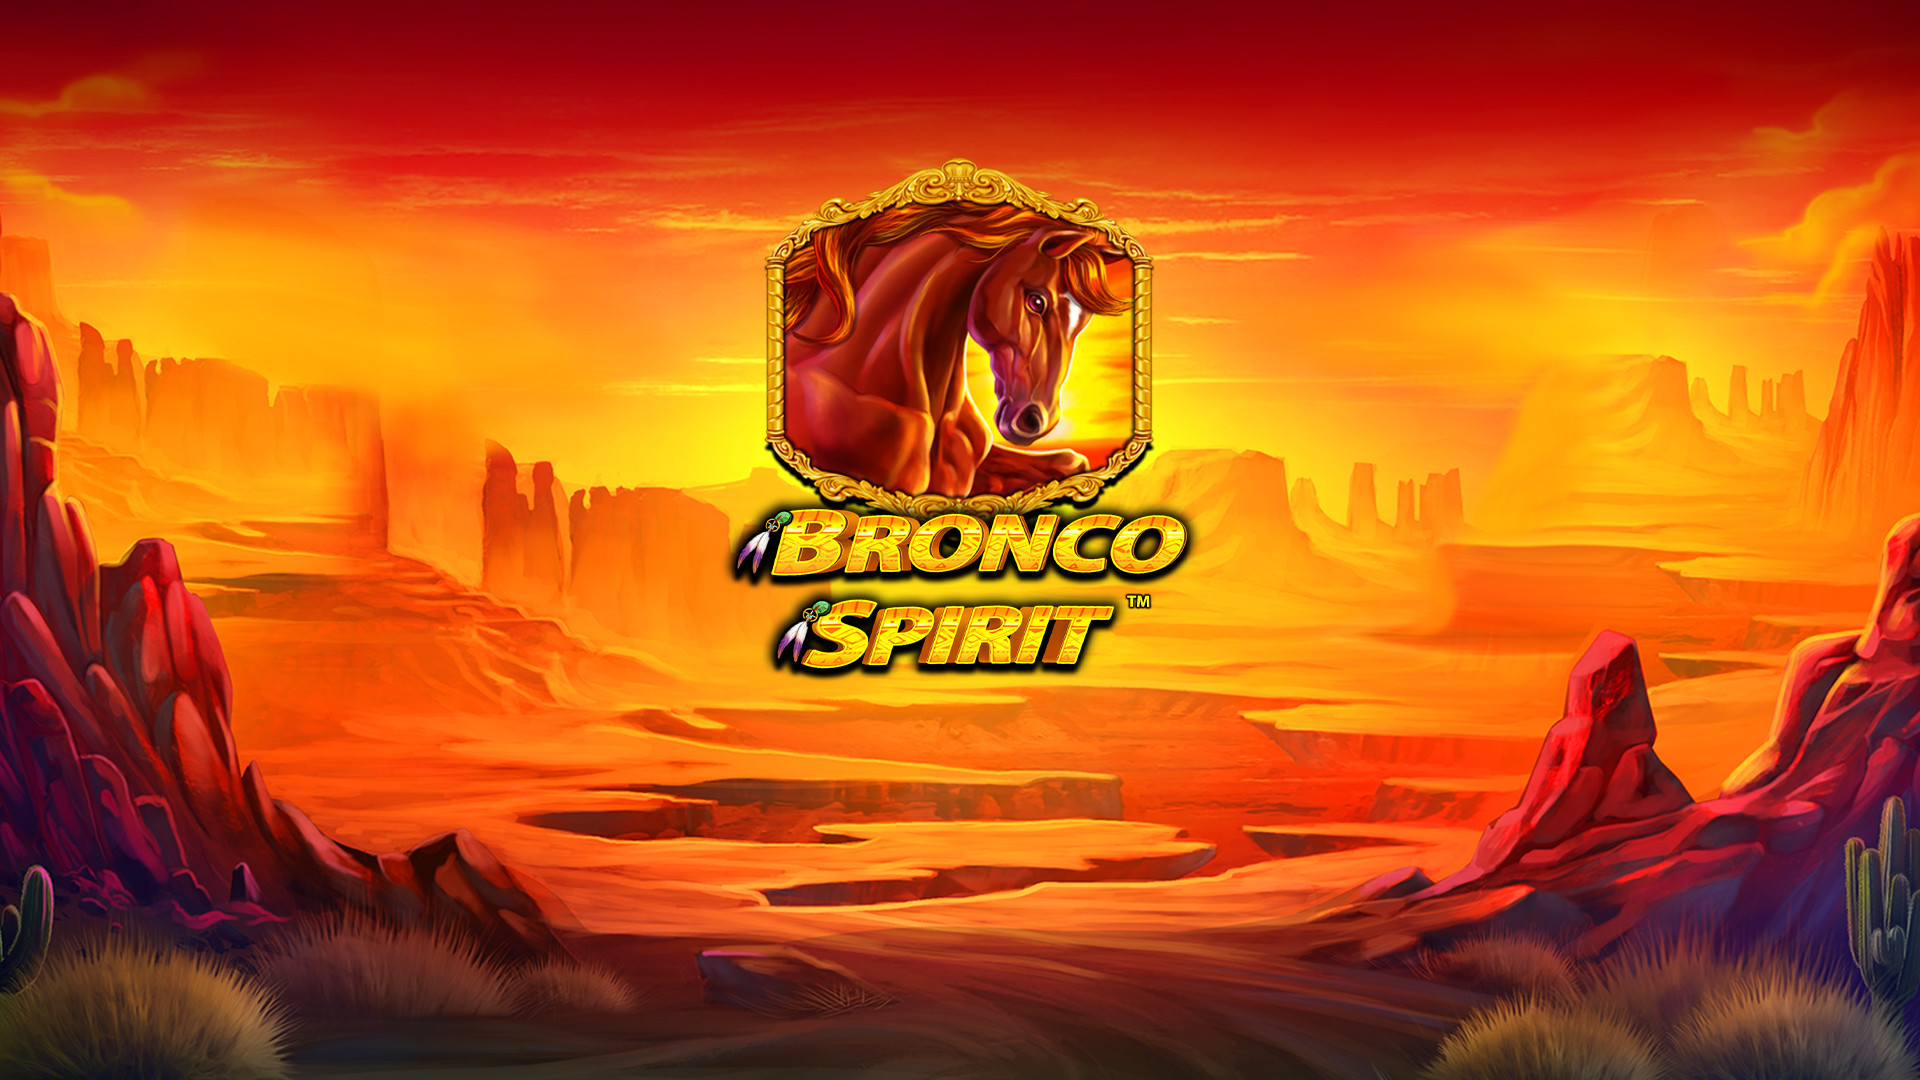 Bronco Spirit